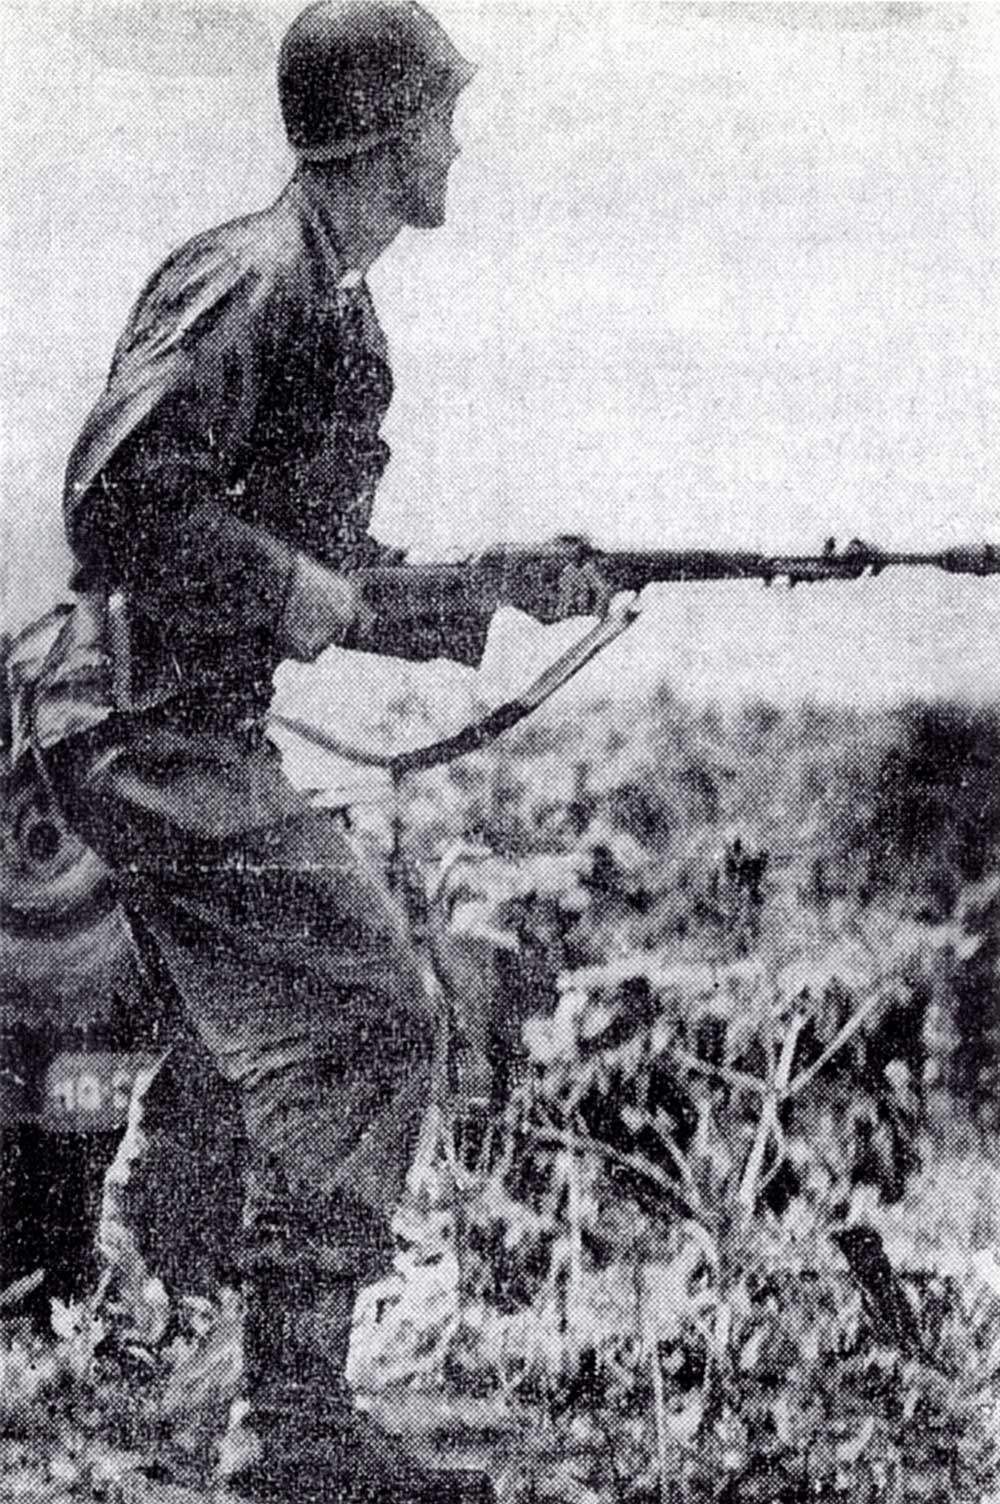 Dan Noorlander with rifle grenade